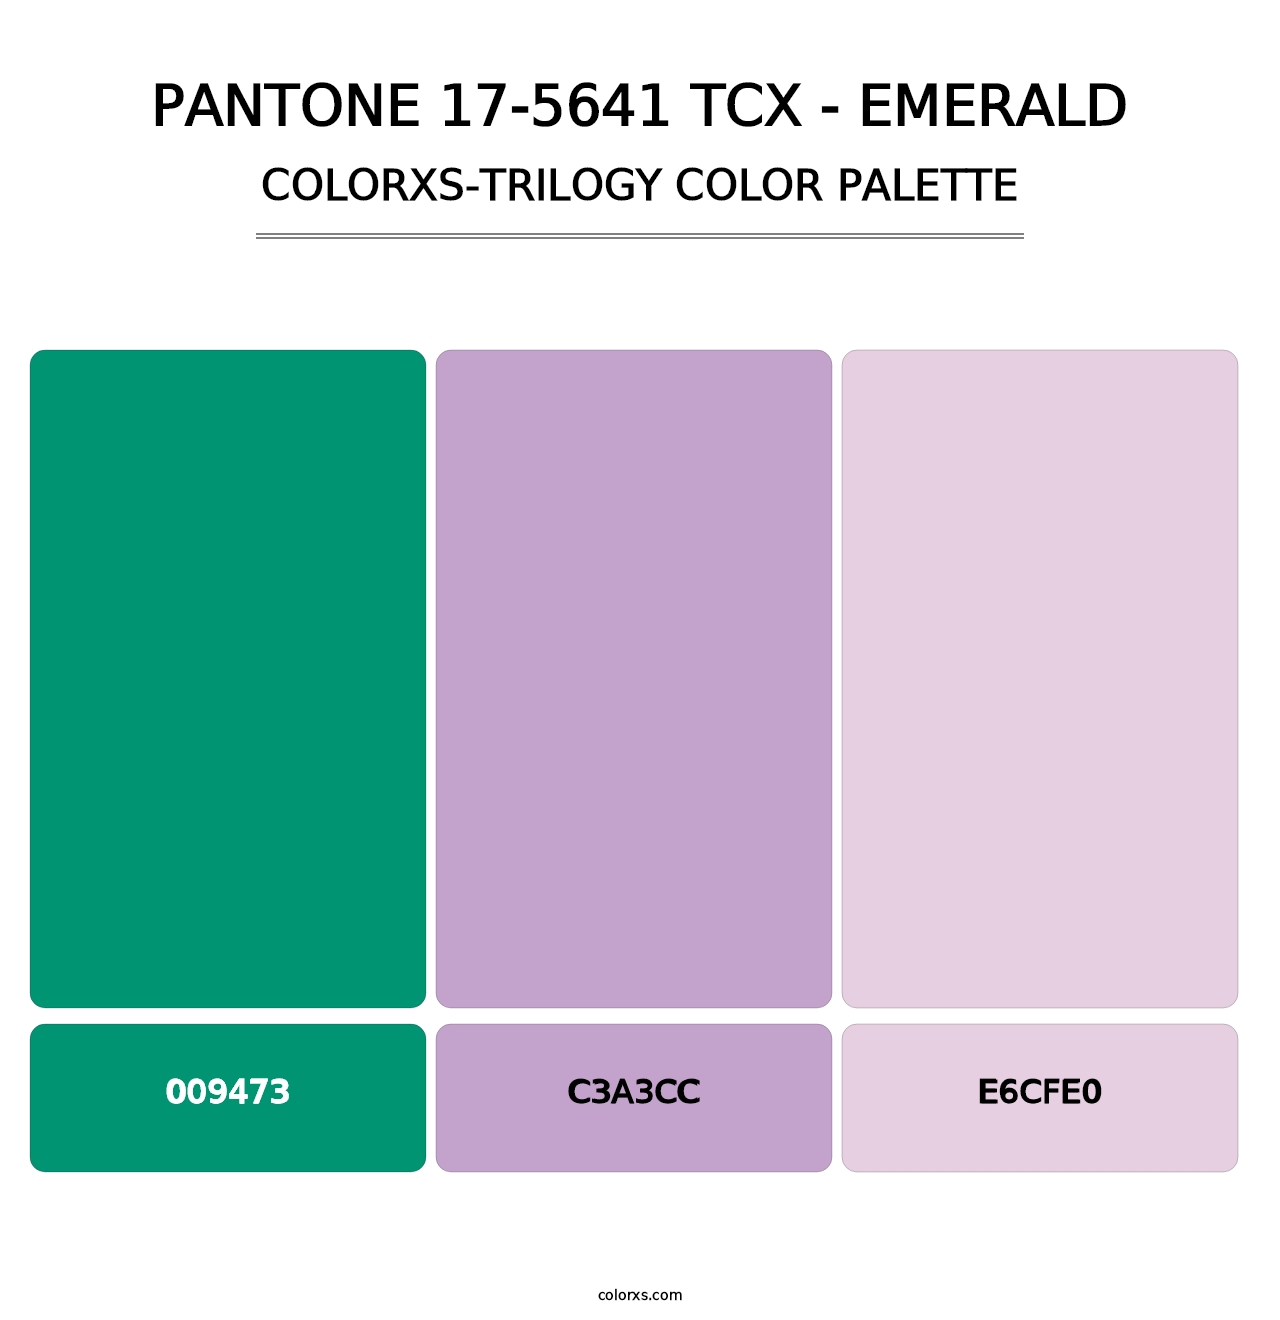 PANTONE 17-5641 TCX - Emerald - Colorxs Trilogy Palette